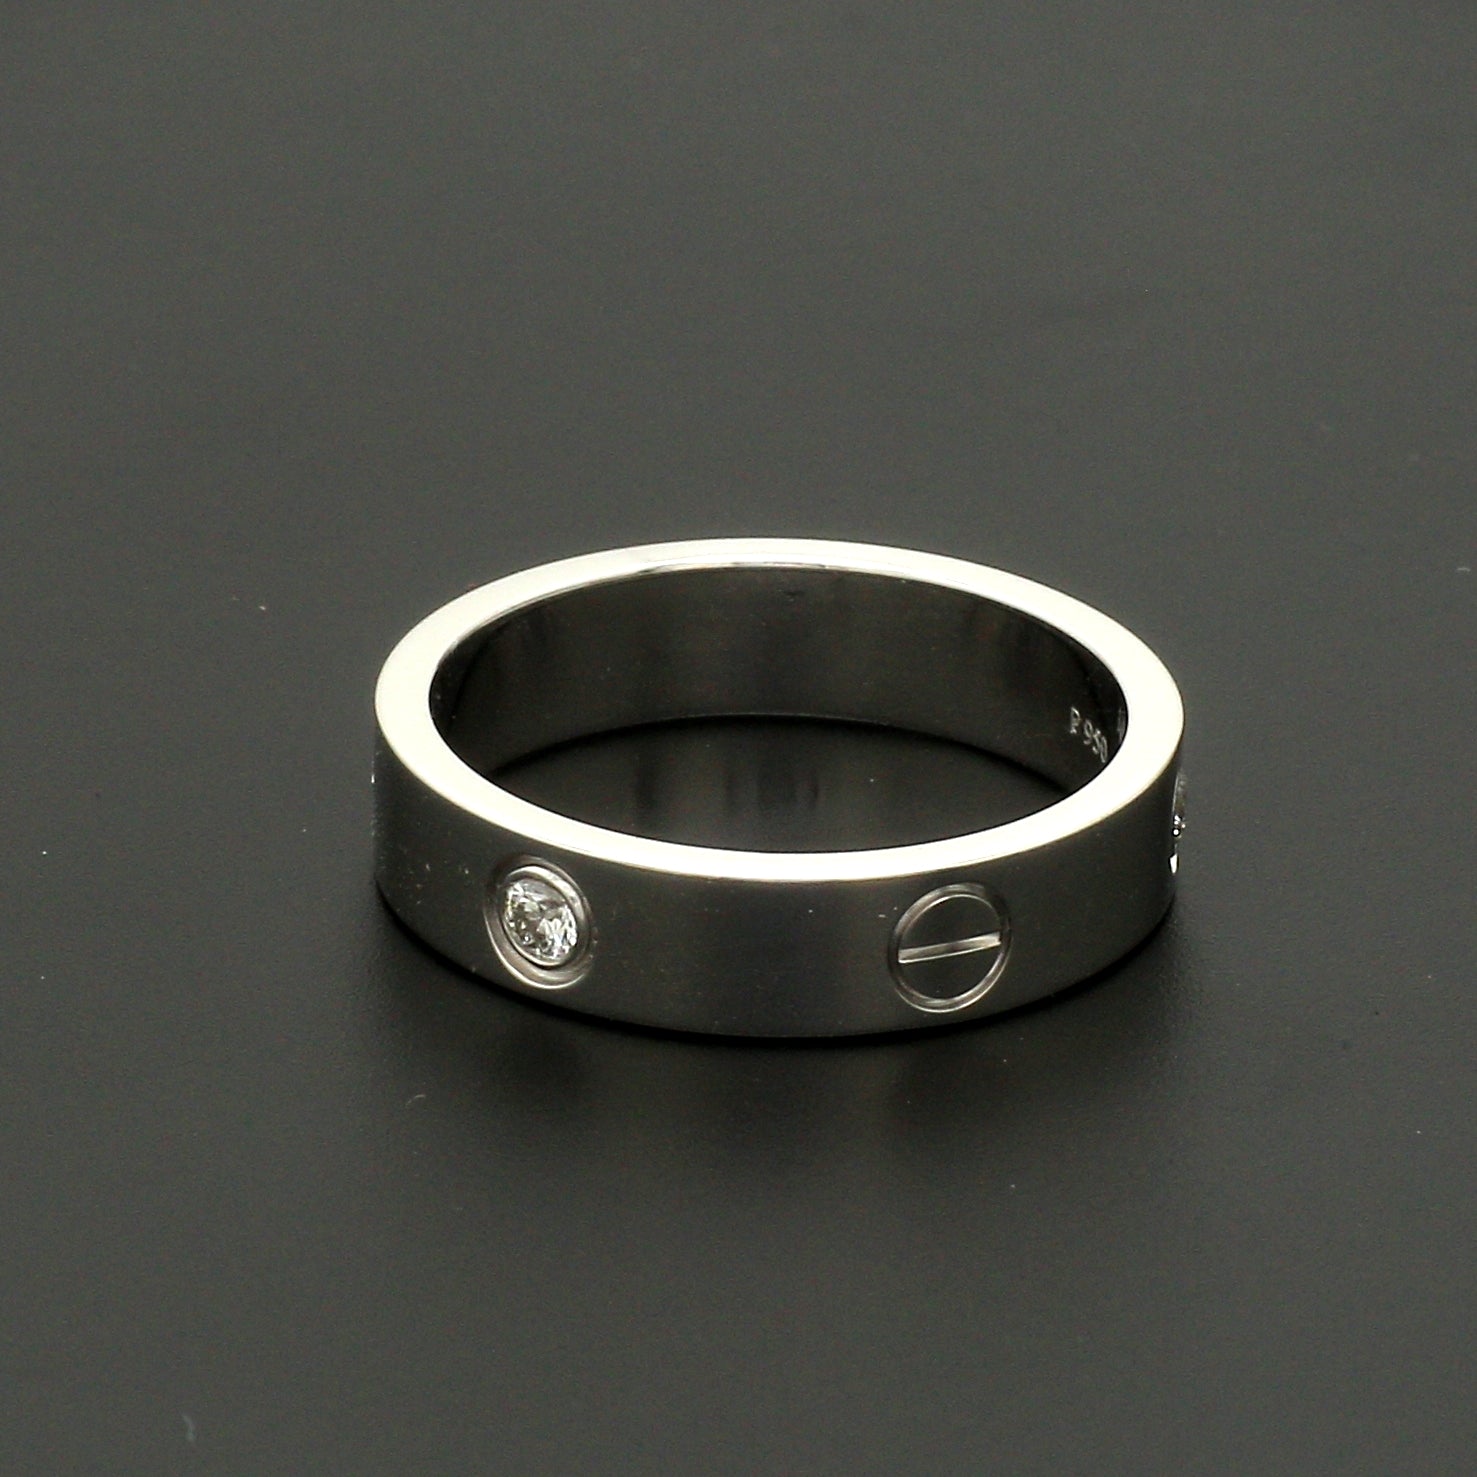 Single Diamond Platinum Couple Rings for JL PT 1167-A   Jewelove